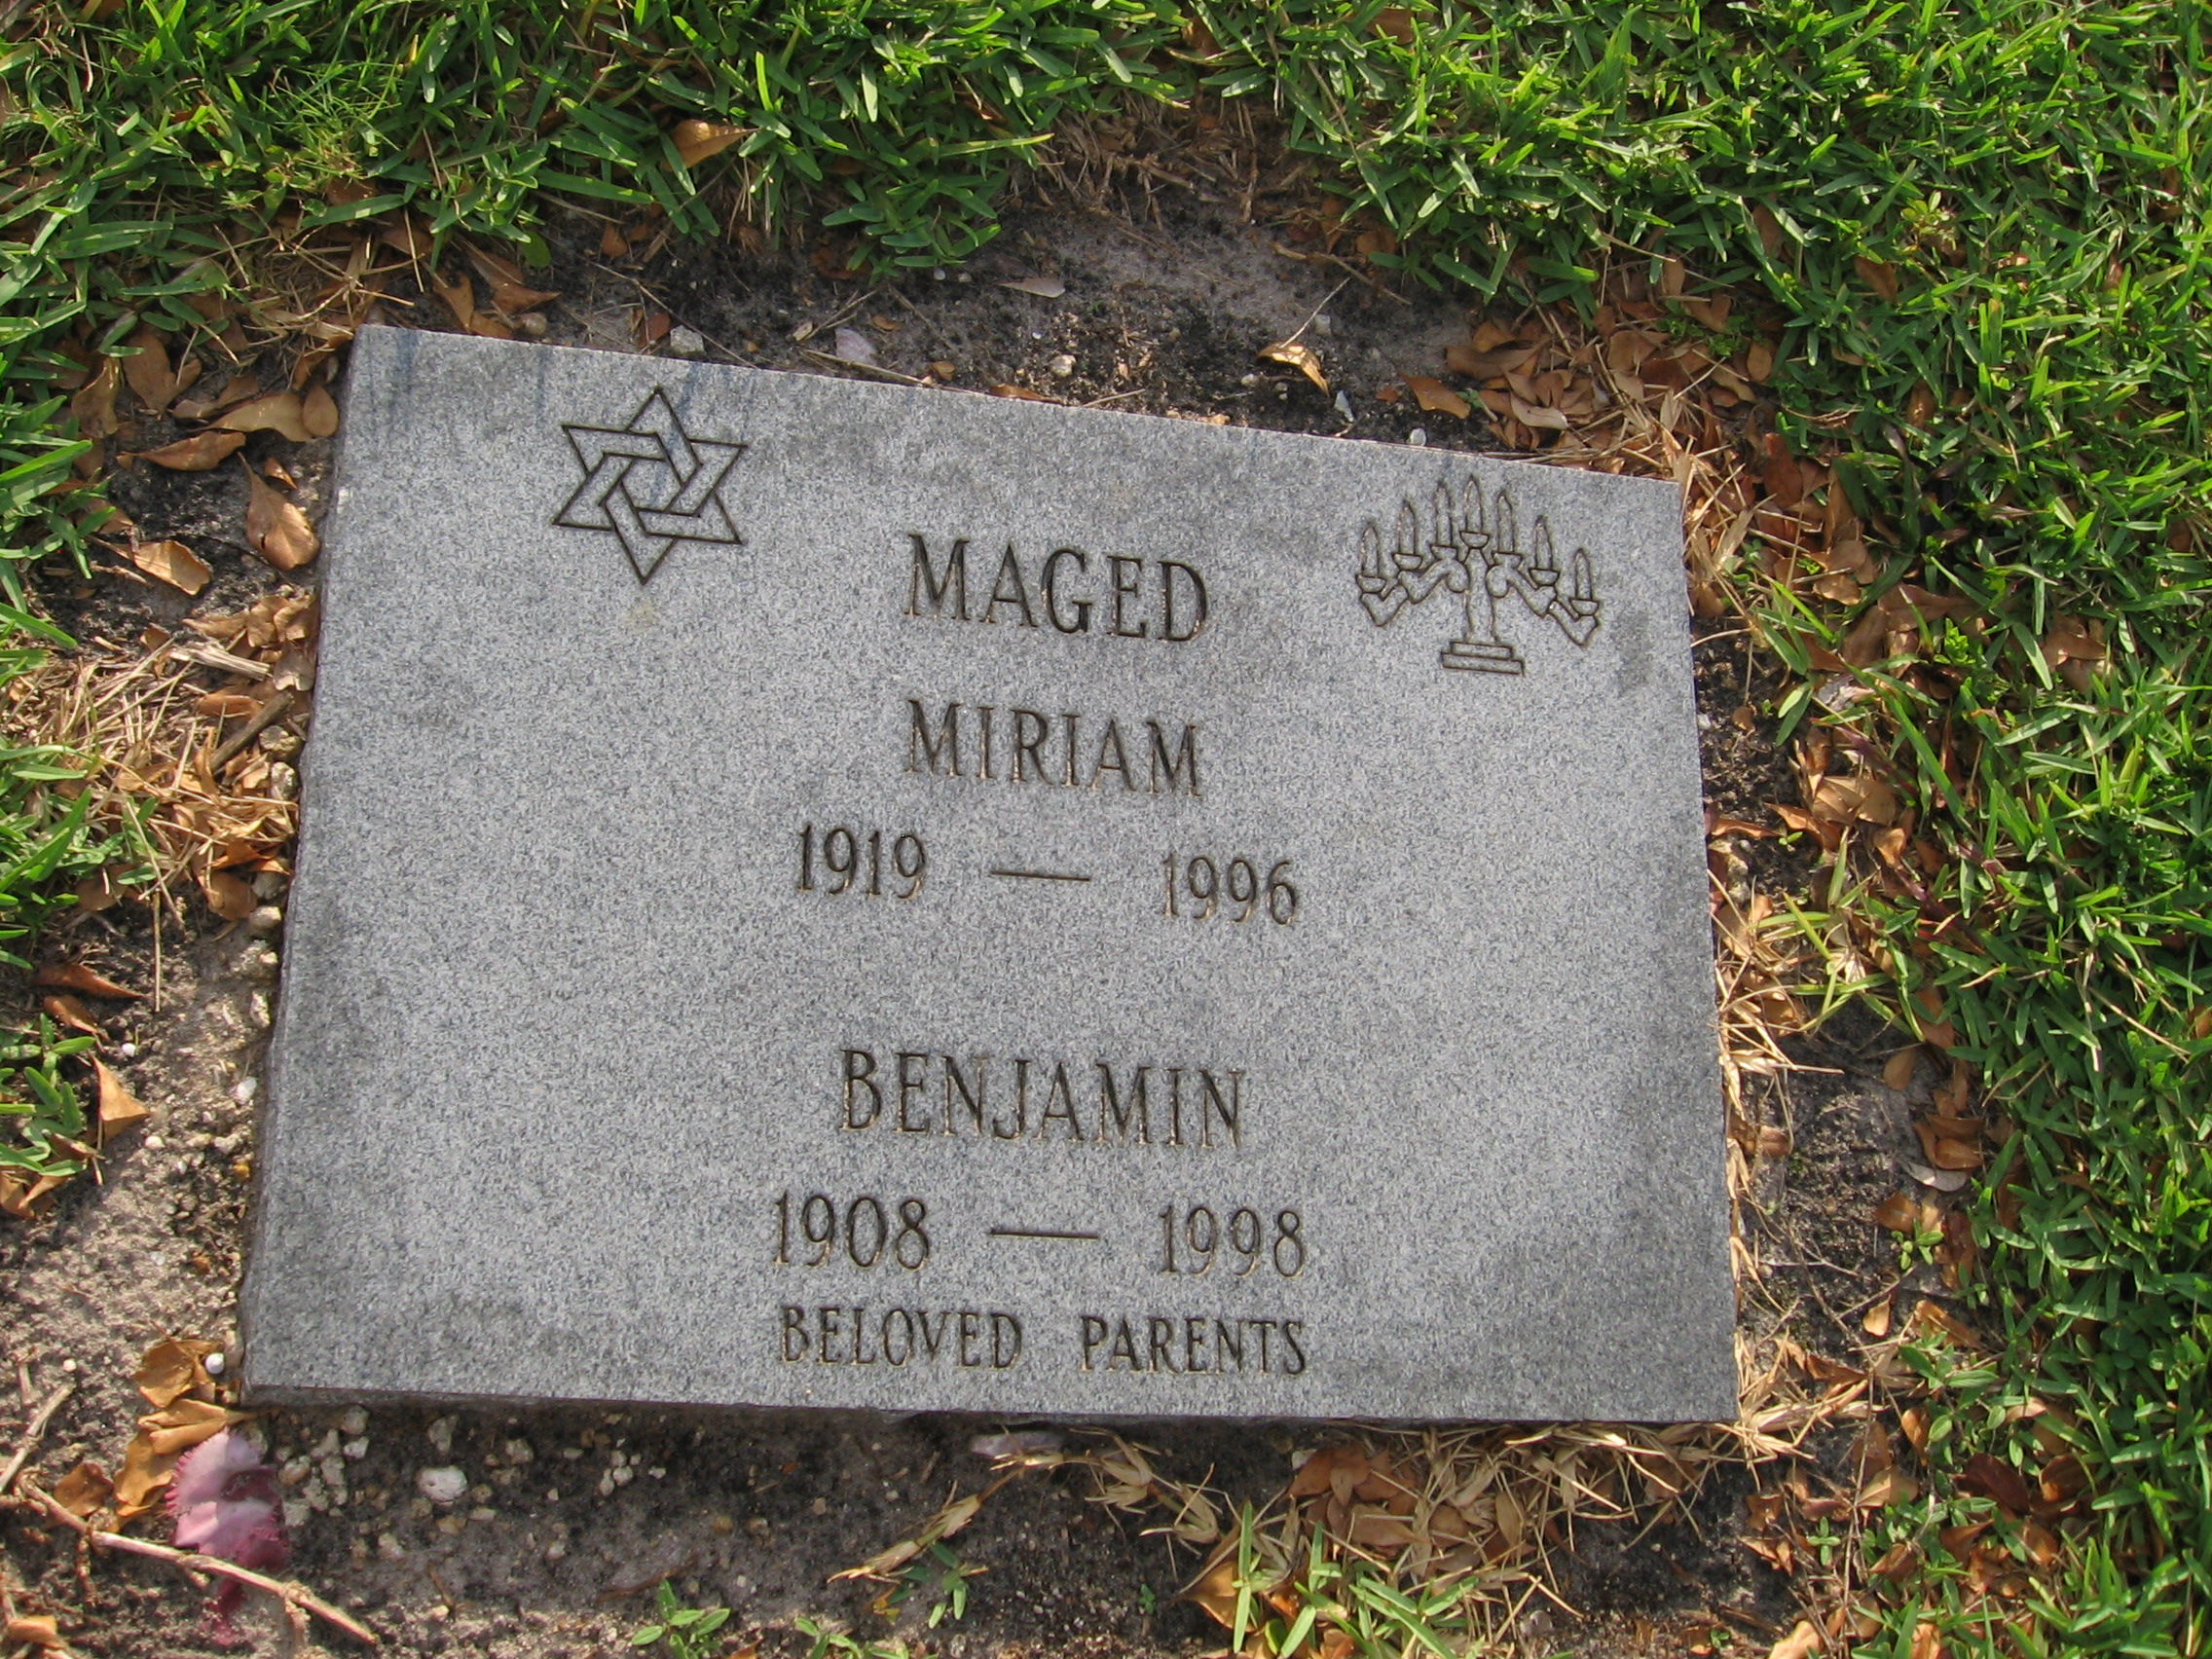 Benjamin Maged